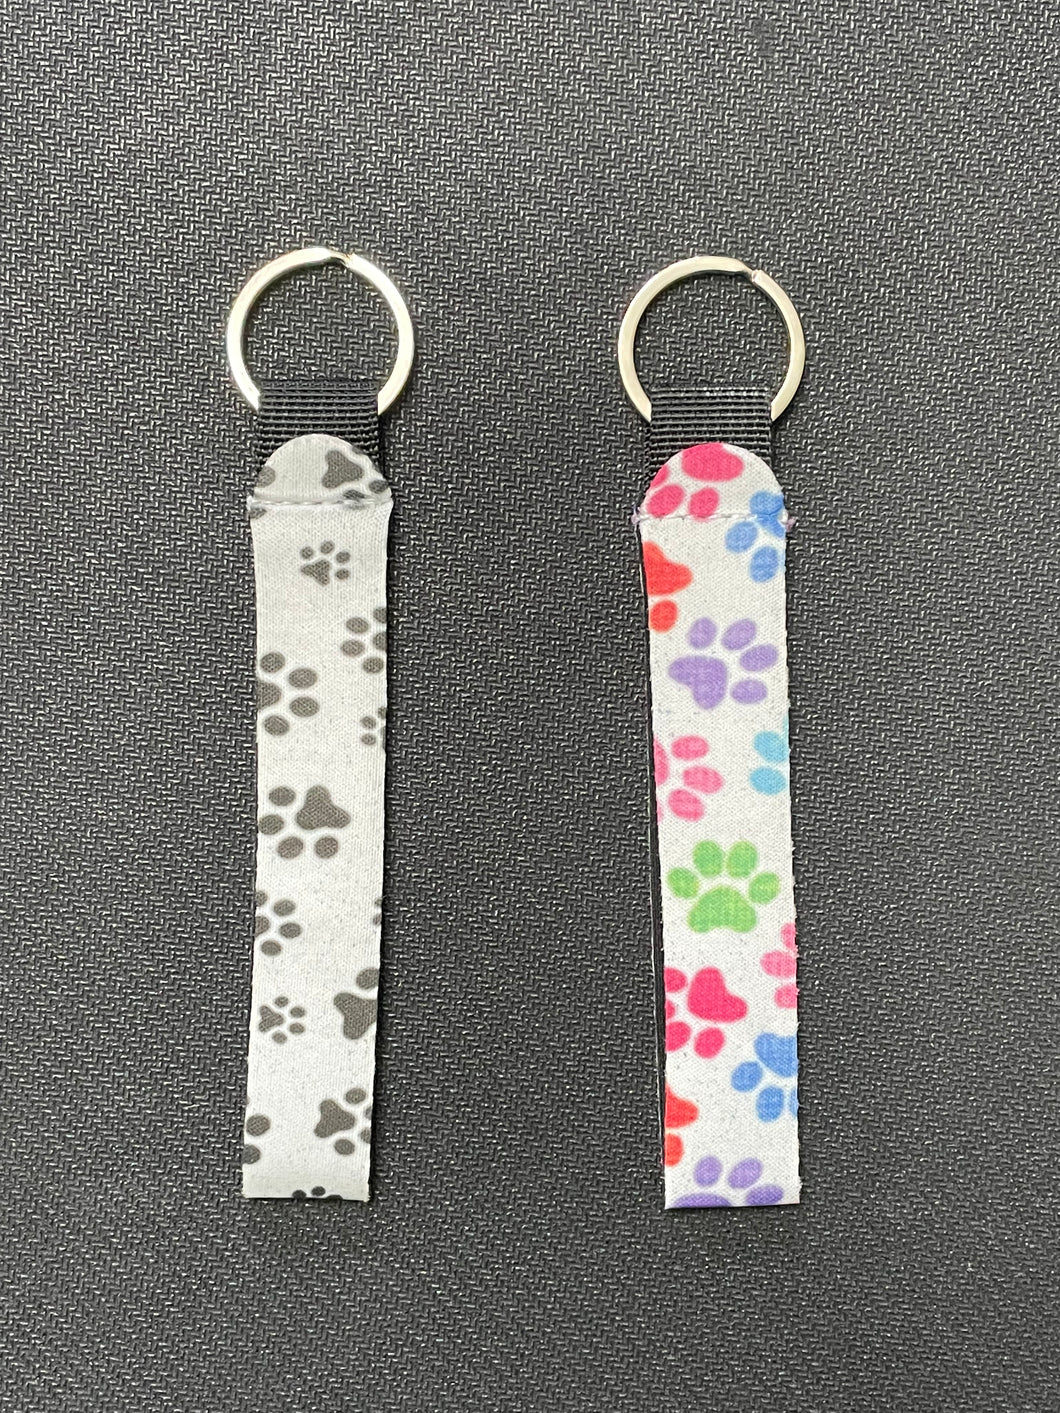 Paw Print Keychain Wristlet - Sassy Dogs Boutique 